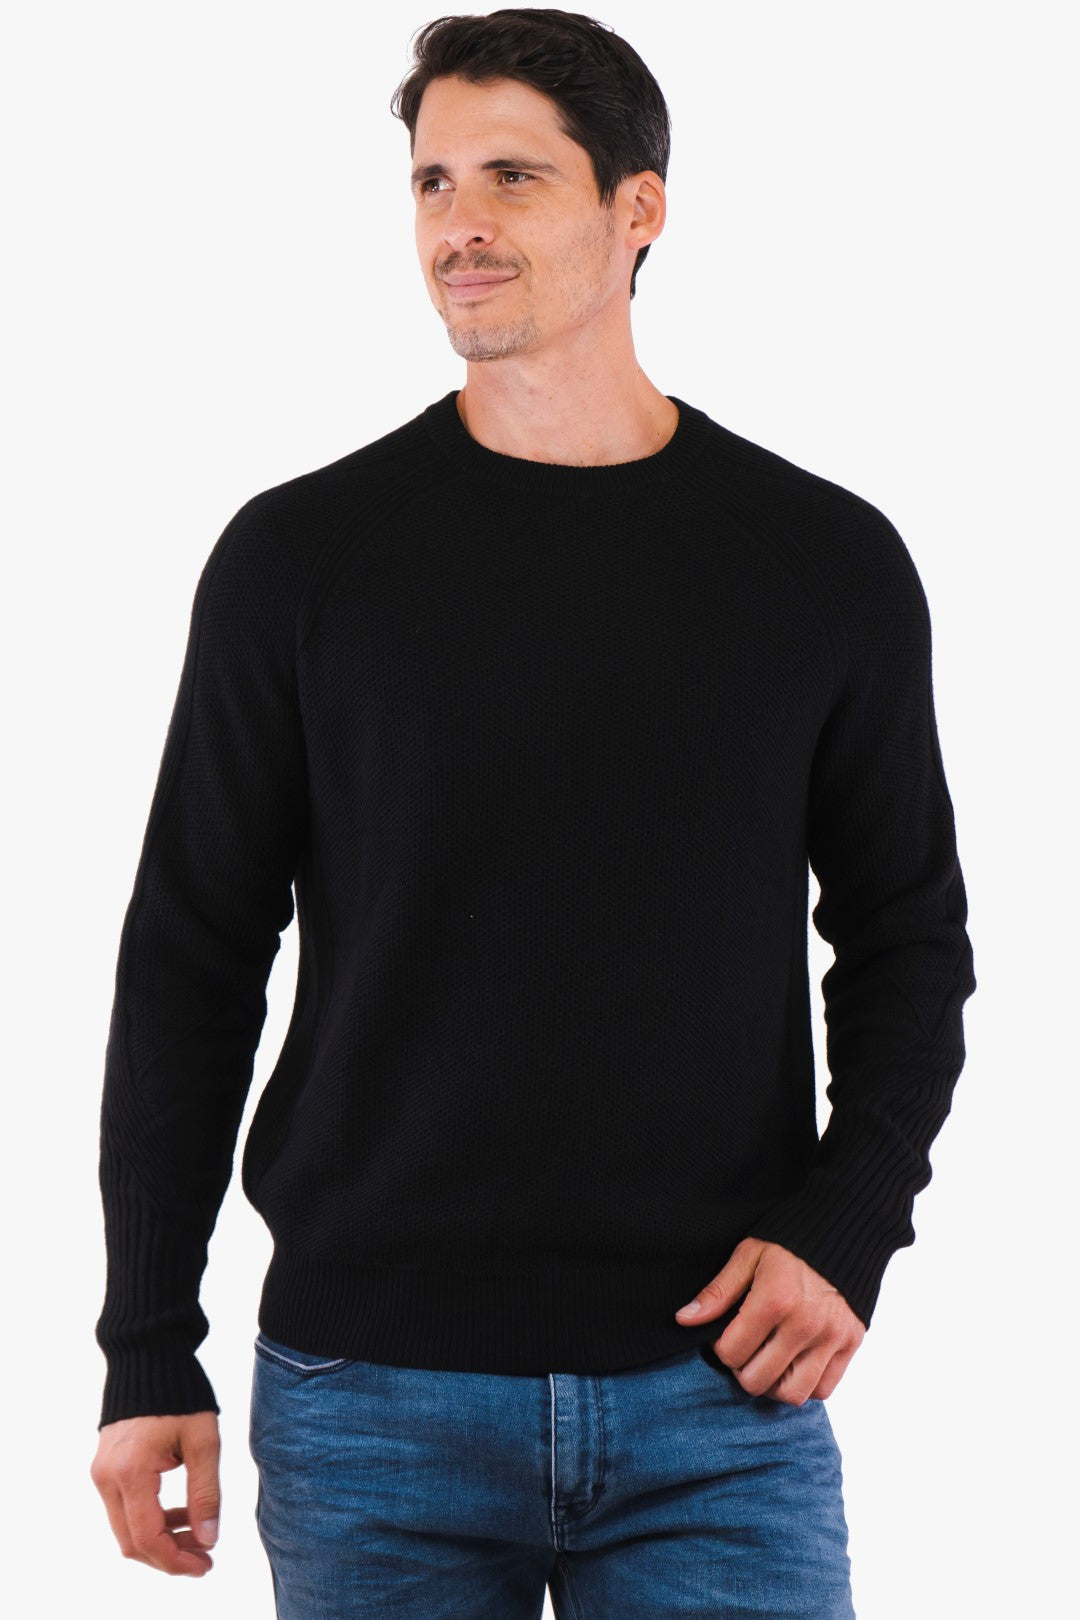 Black Michael Kors sweater